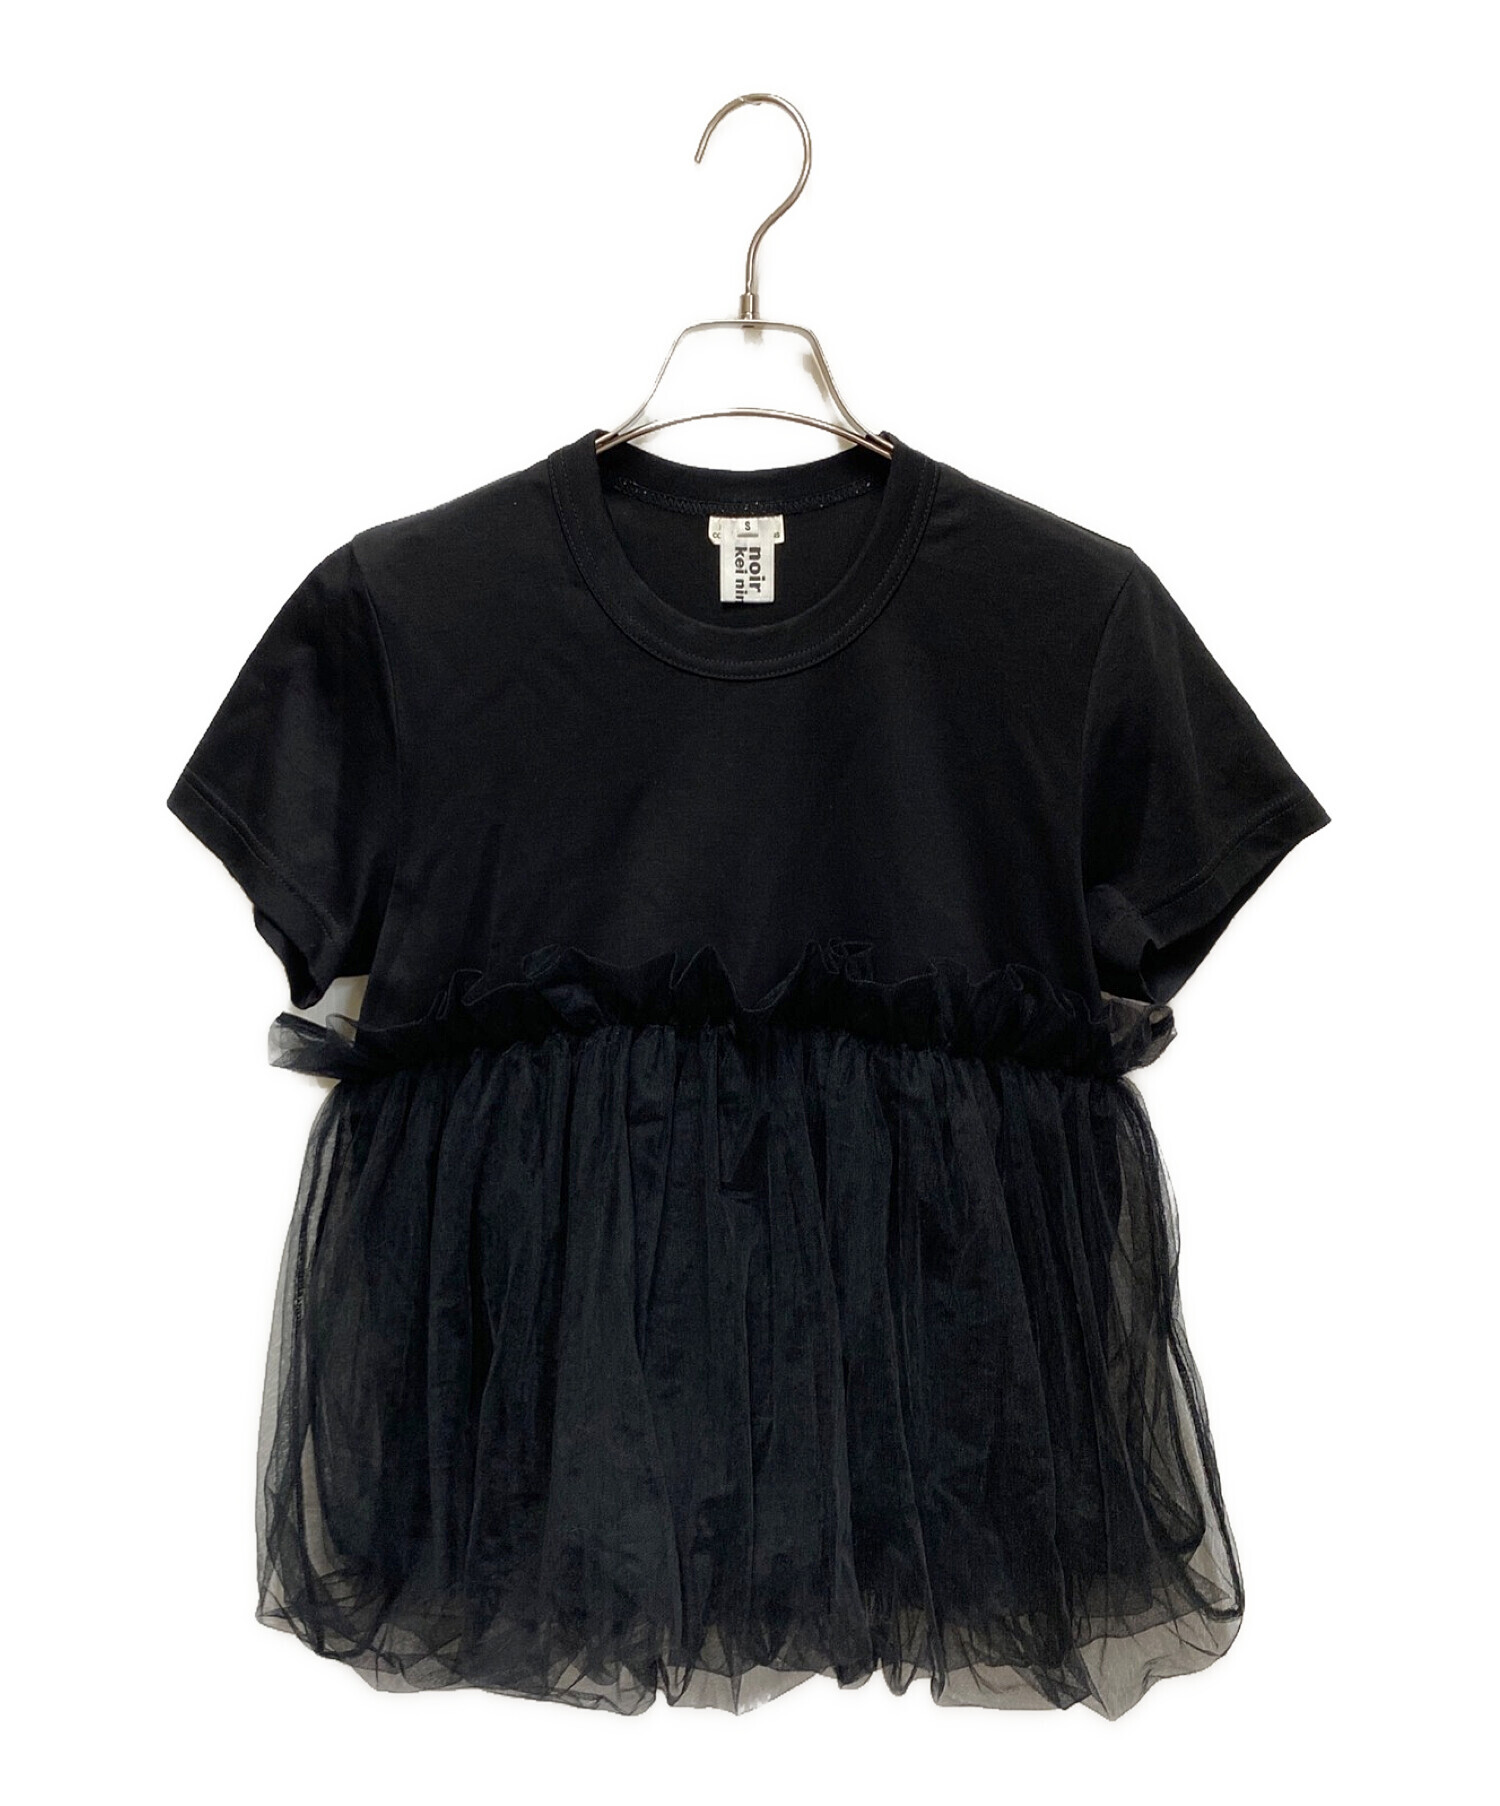 noir kei ninomiya (ノワール ケイ ニノミヤ) チュール切替Tシャツ ブラック サイズ:S